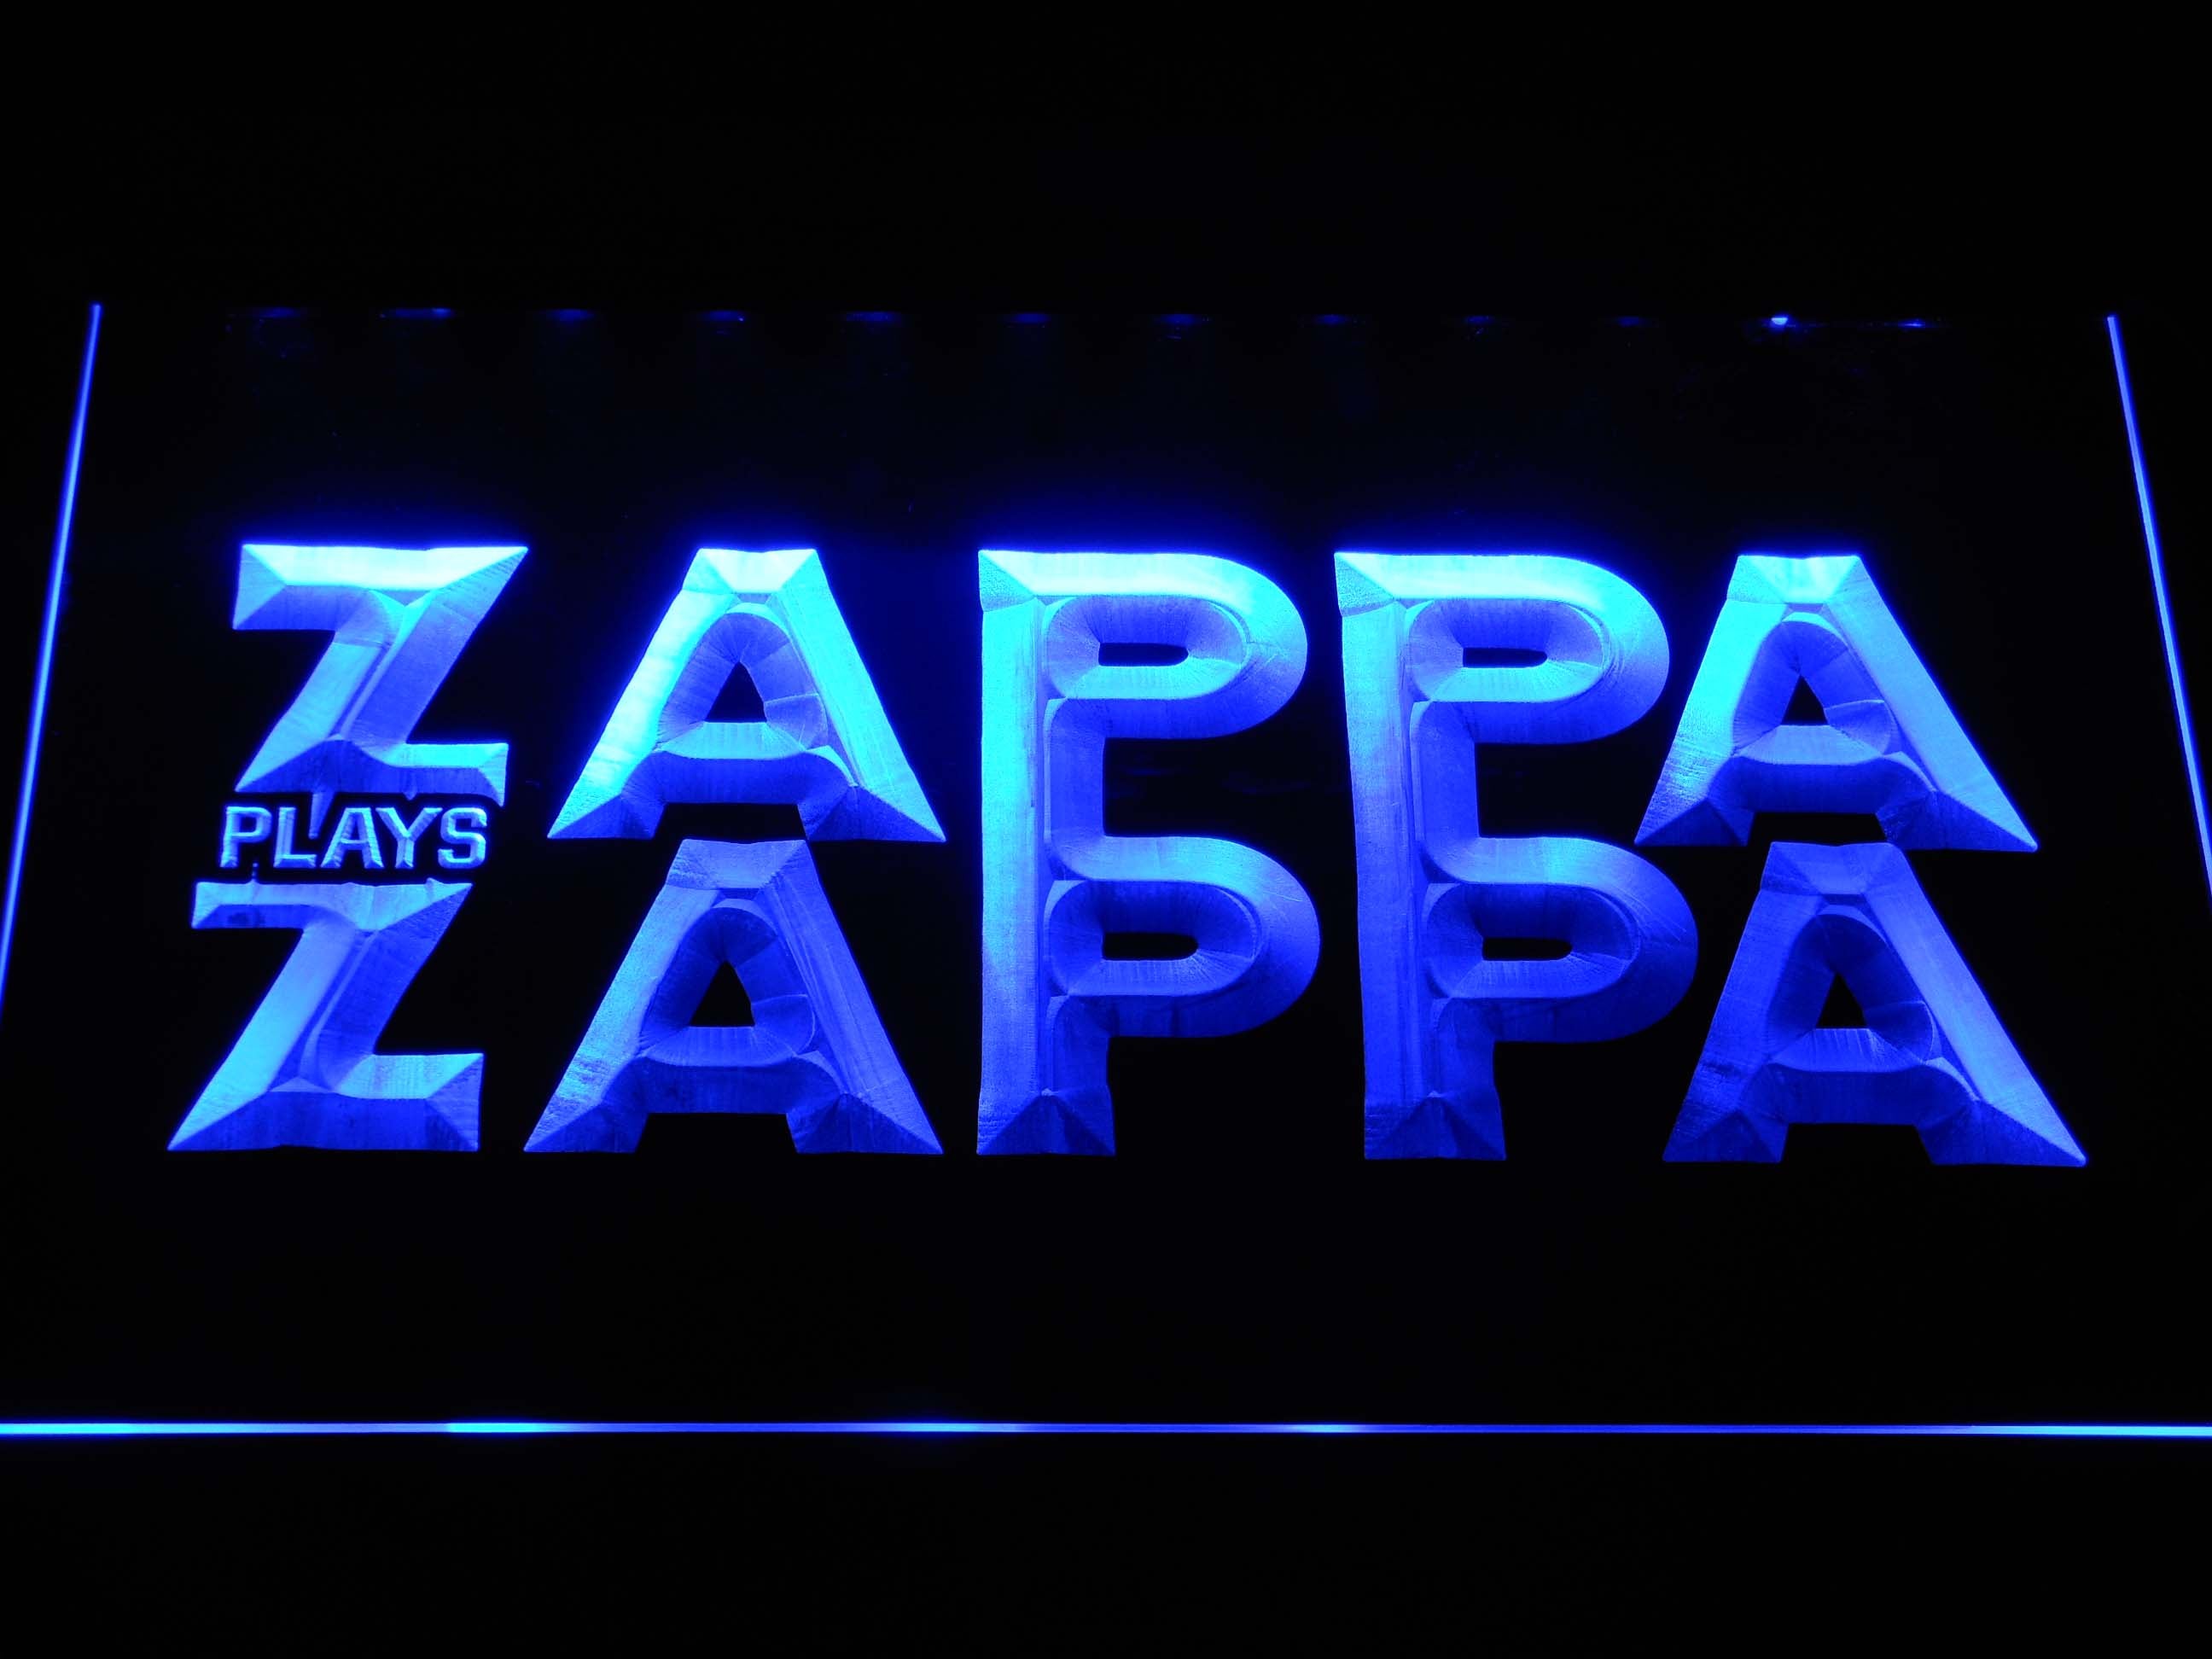 Zappa Plays Zappa Band LED Neon Sign